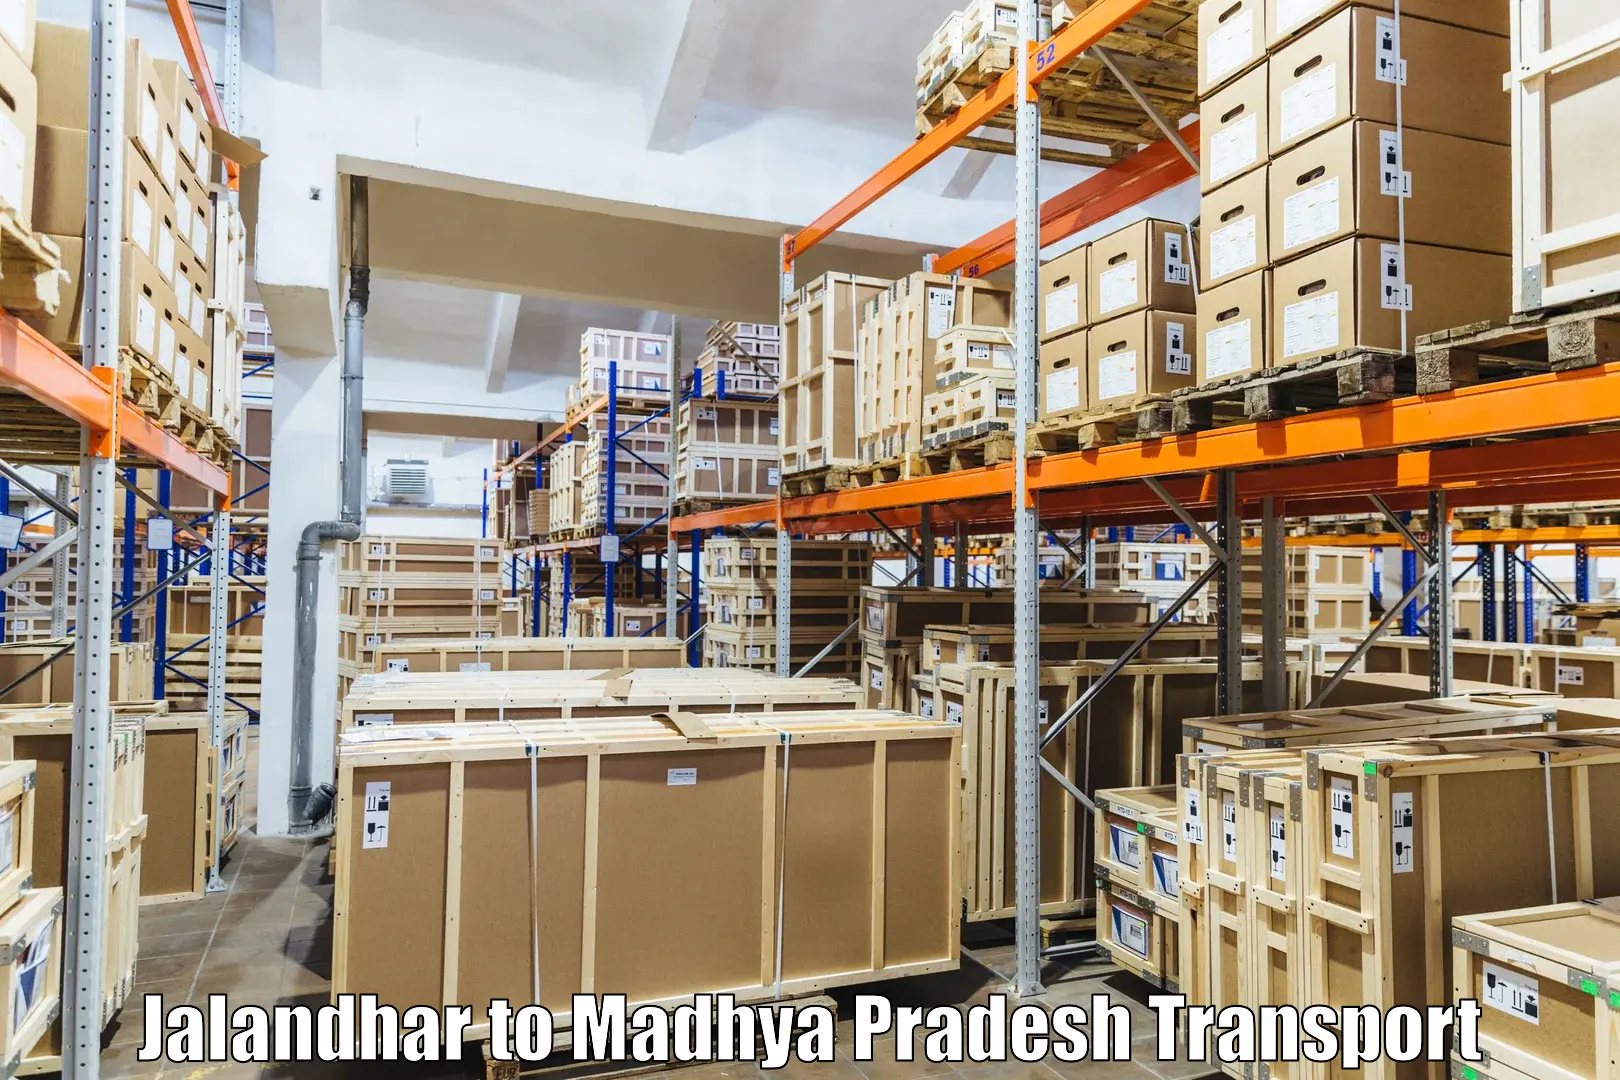 Part load transport service in India in Jalandhar to Amarwara